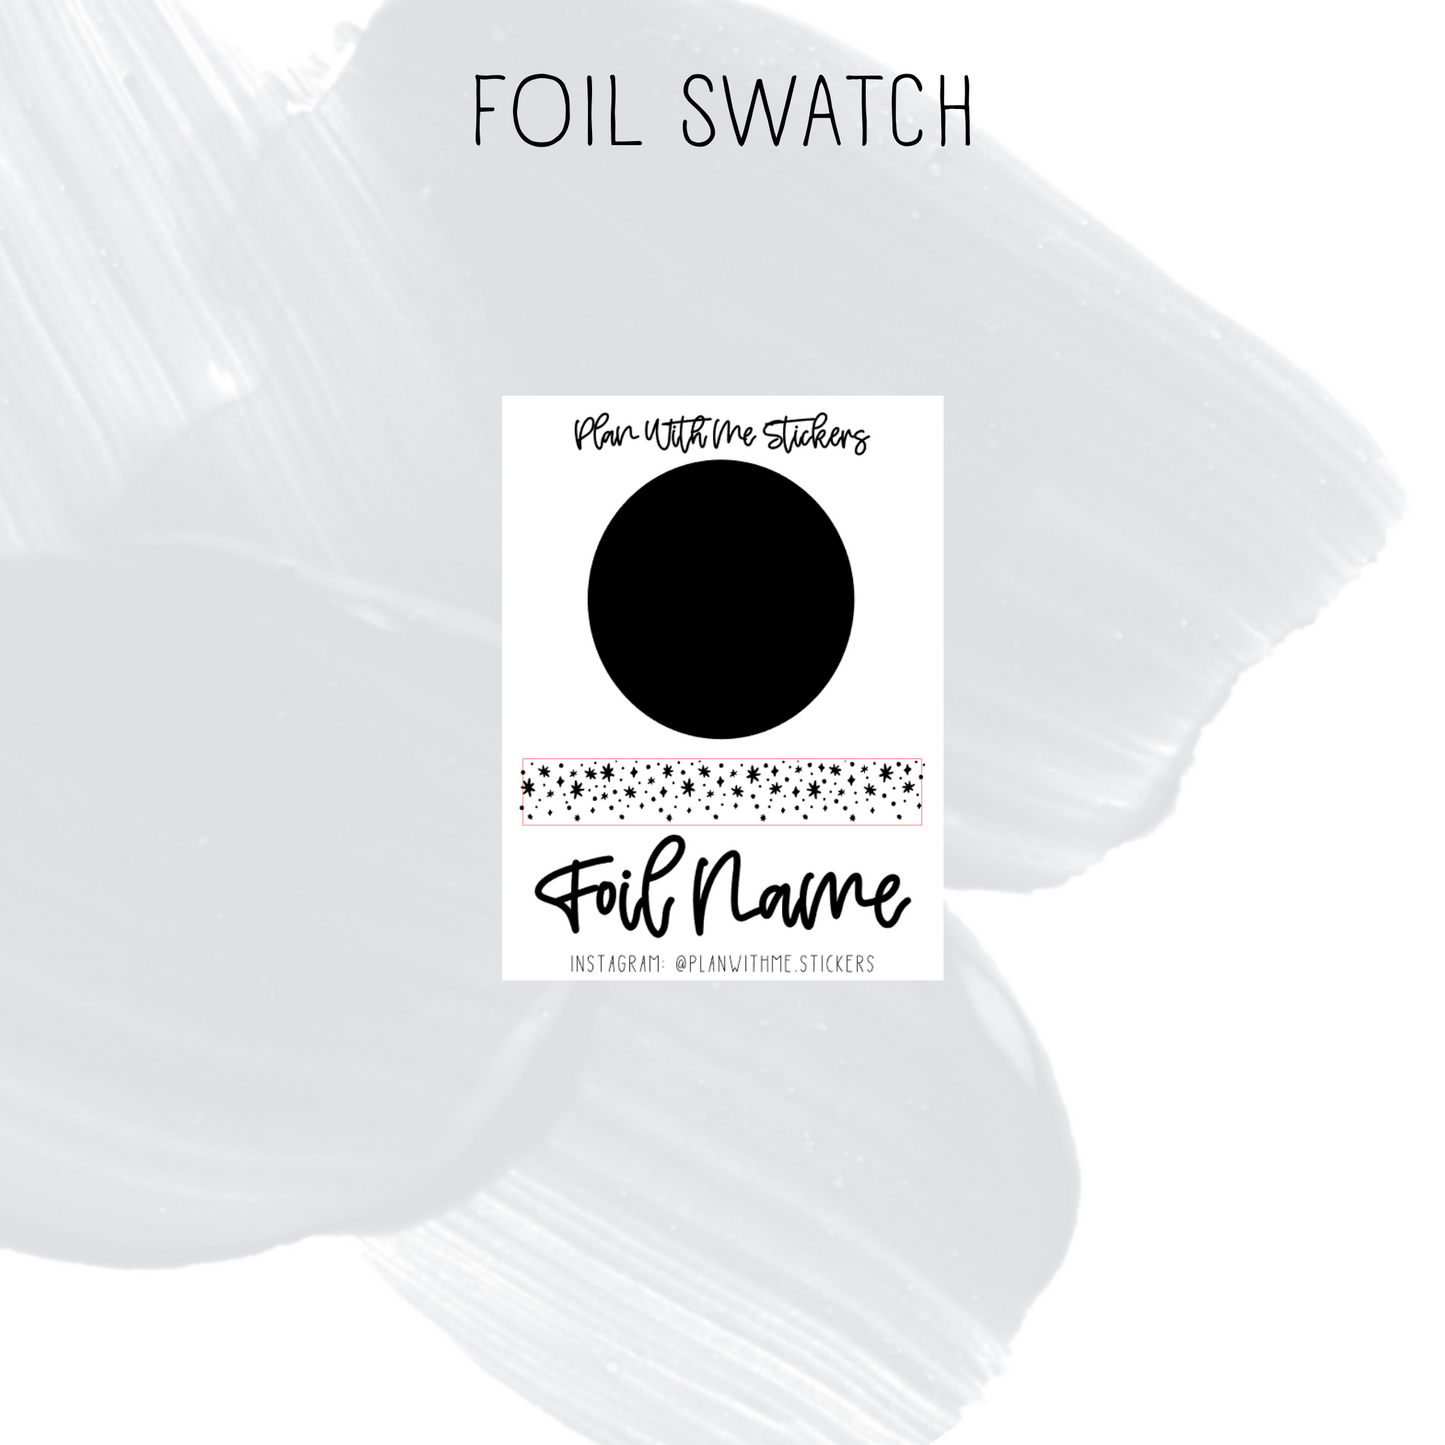 Foil Swatch Samples